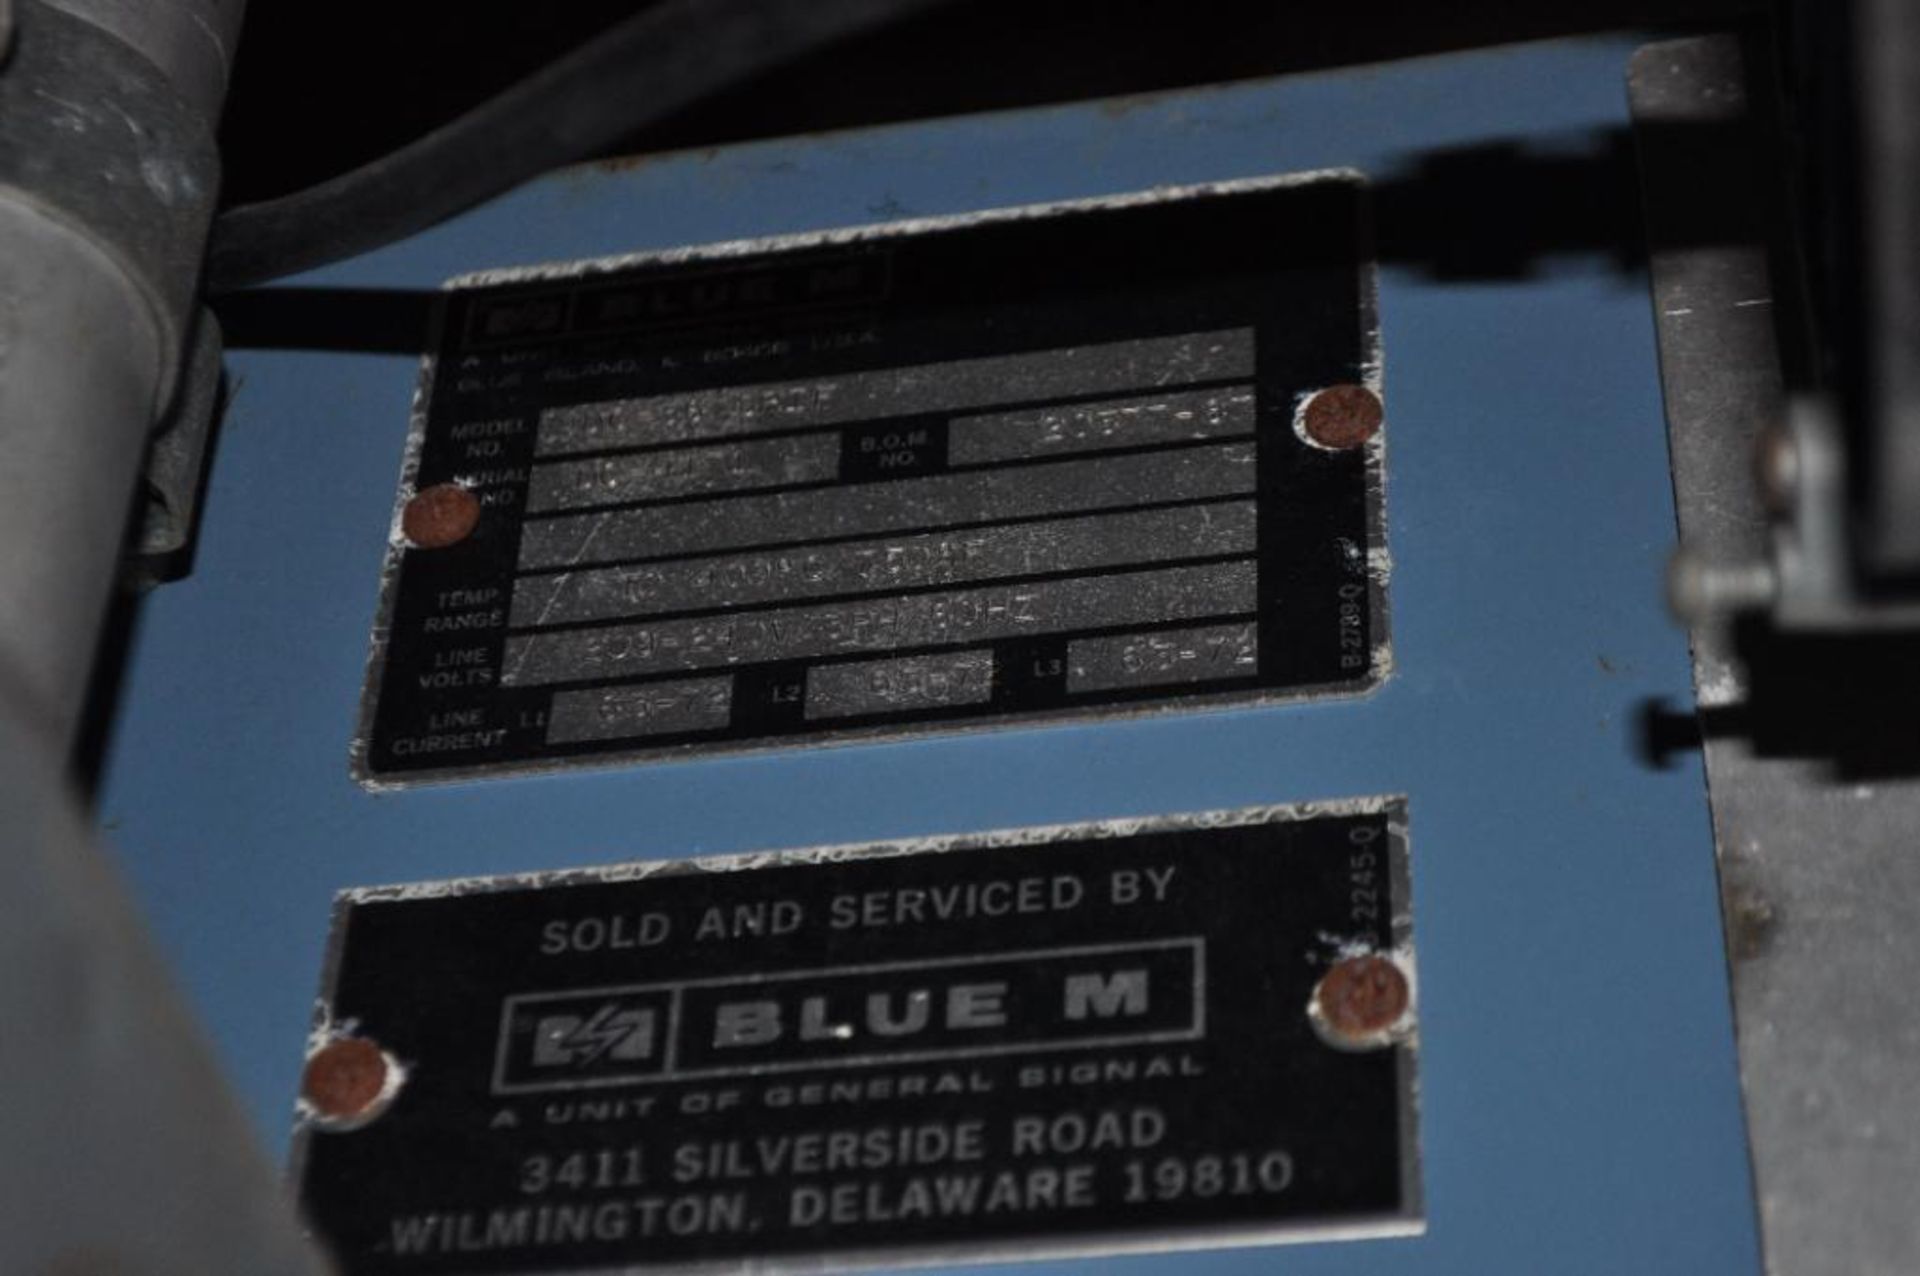 BLUE M ELECTRIC LAB OVEN RANGE, MODEL: DC-367SRIF, 0-750 DEGREE C - Image 7 of 7